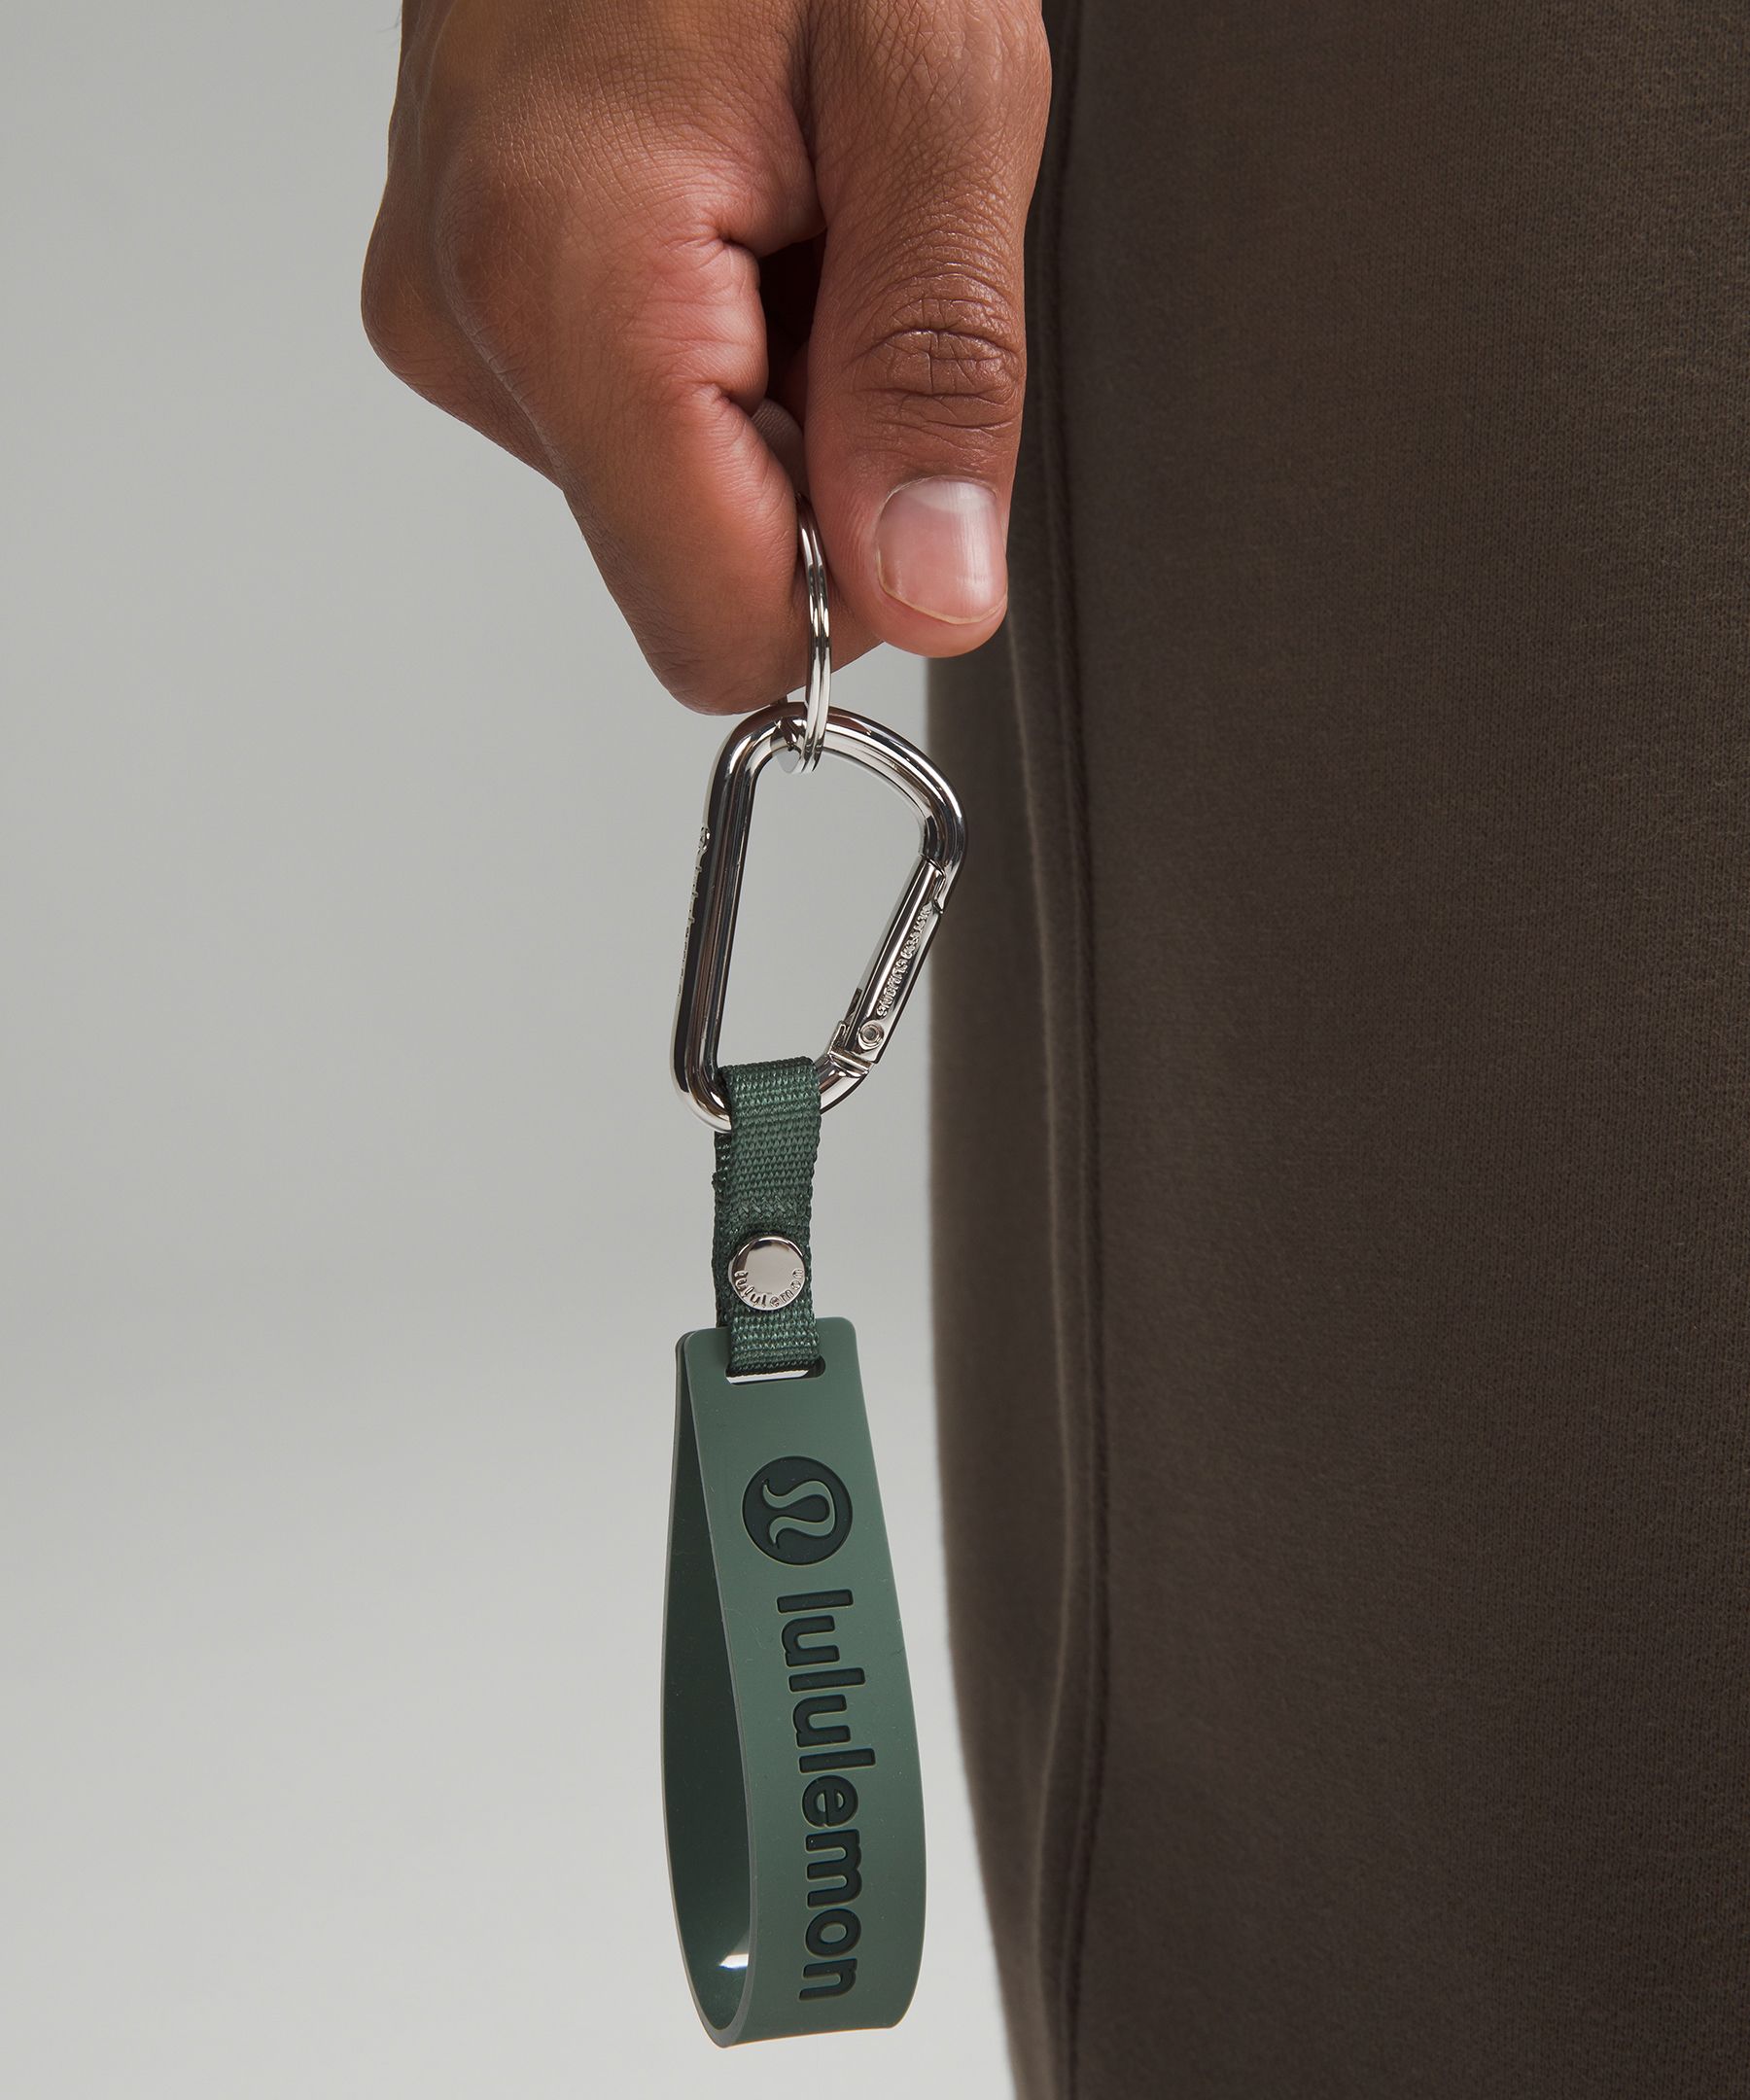 Brand Silicone Greenwhite In Keychain Size Nwt Kohlrabi Lululemon New One, Key & Card Holders